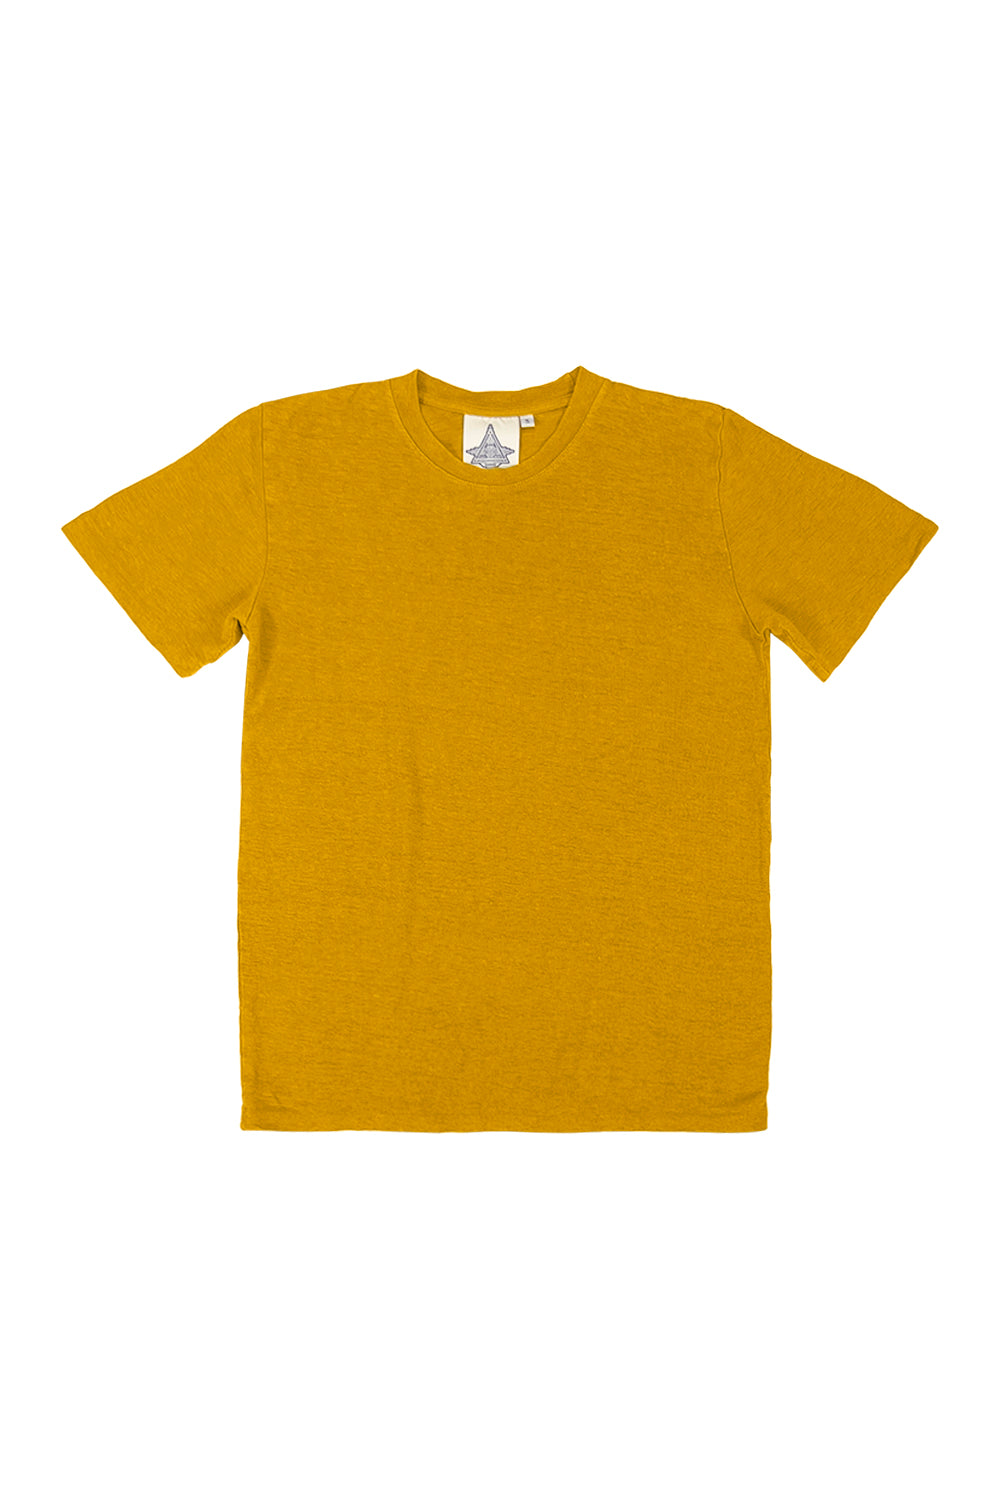 Mana 10 - 100% Hemp Tee | Jungmaven Hemp Clothing & Accessories / Color: Spicy Mustard